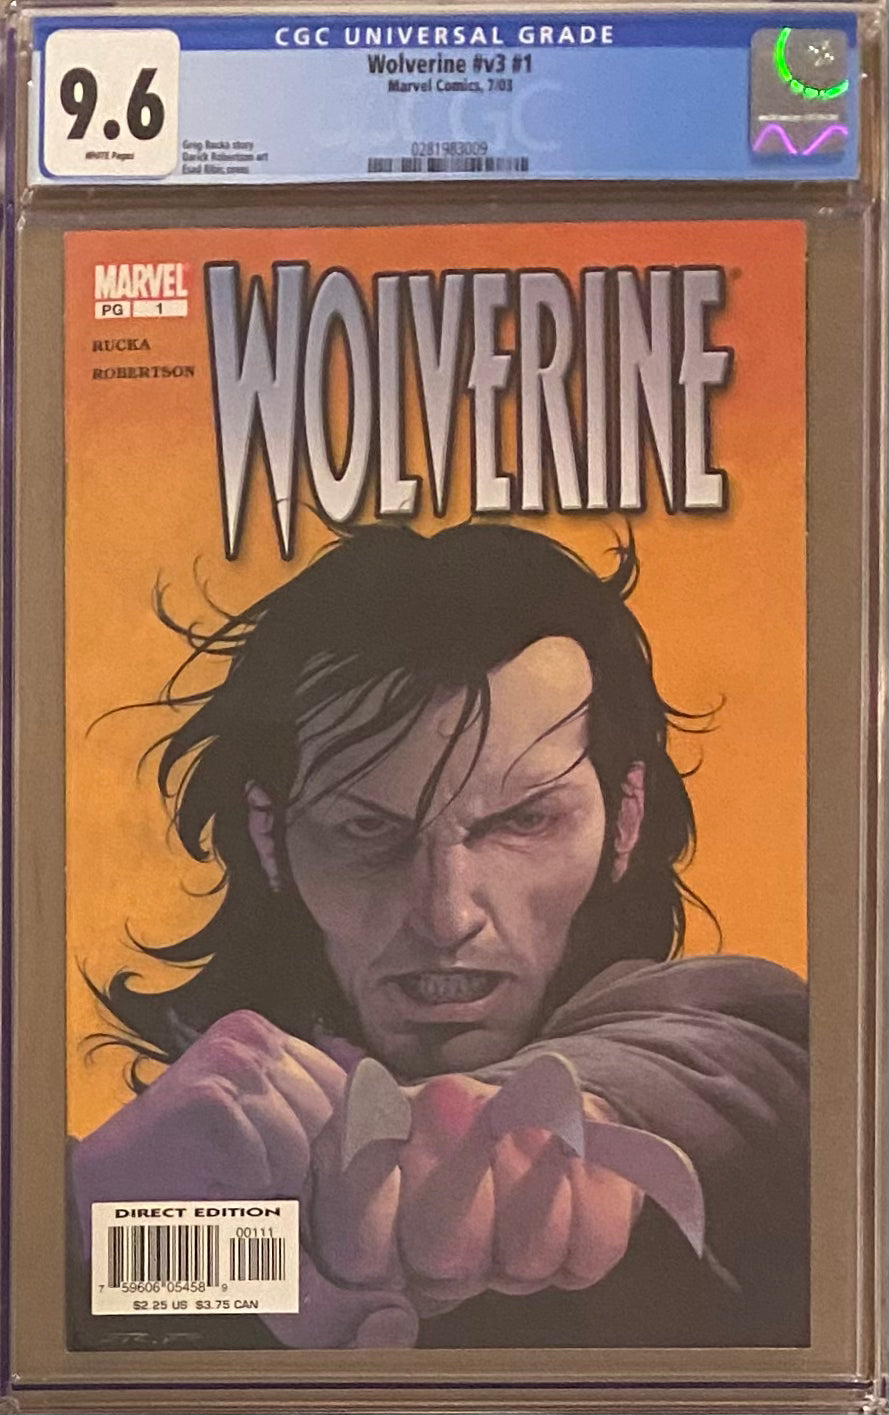 Wolverine #v3 #1 CGC 9.6